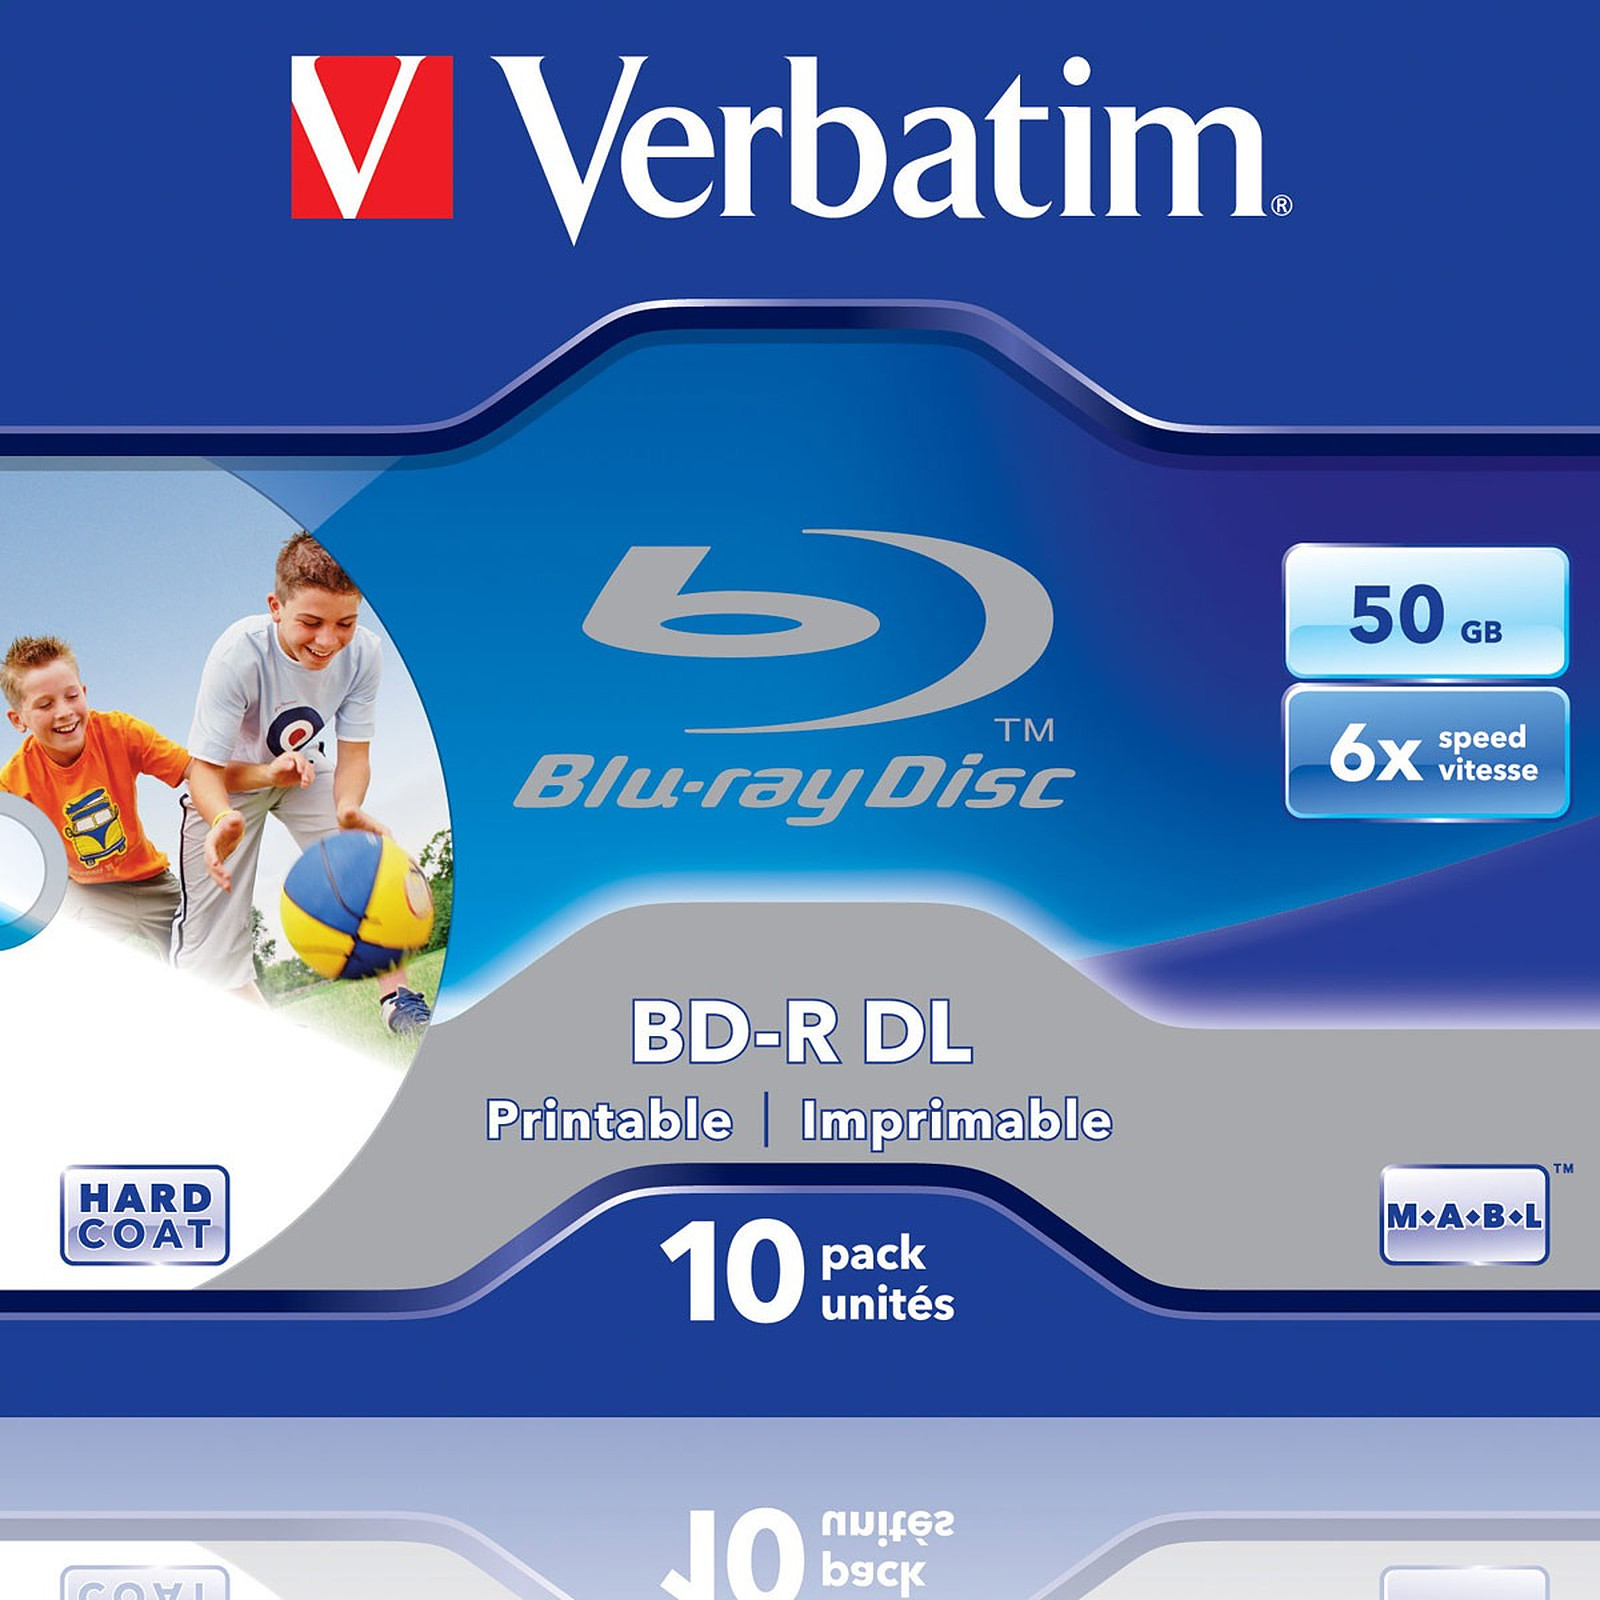 Verbatim BD-R DL 50 Go 6x imprimable (par 10, boite) - Blu-ray vierge Verbatim